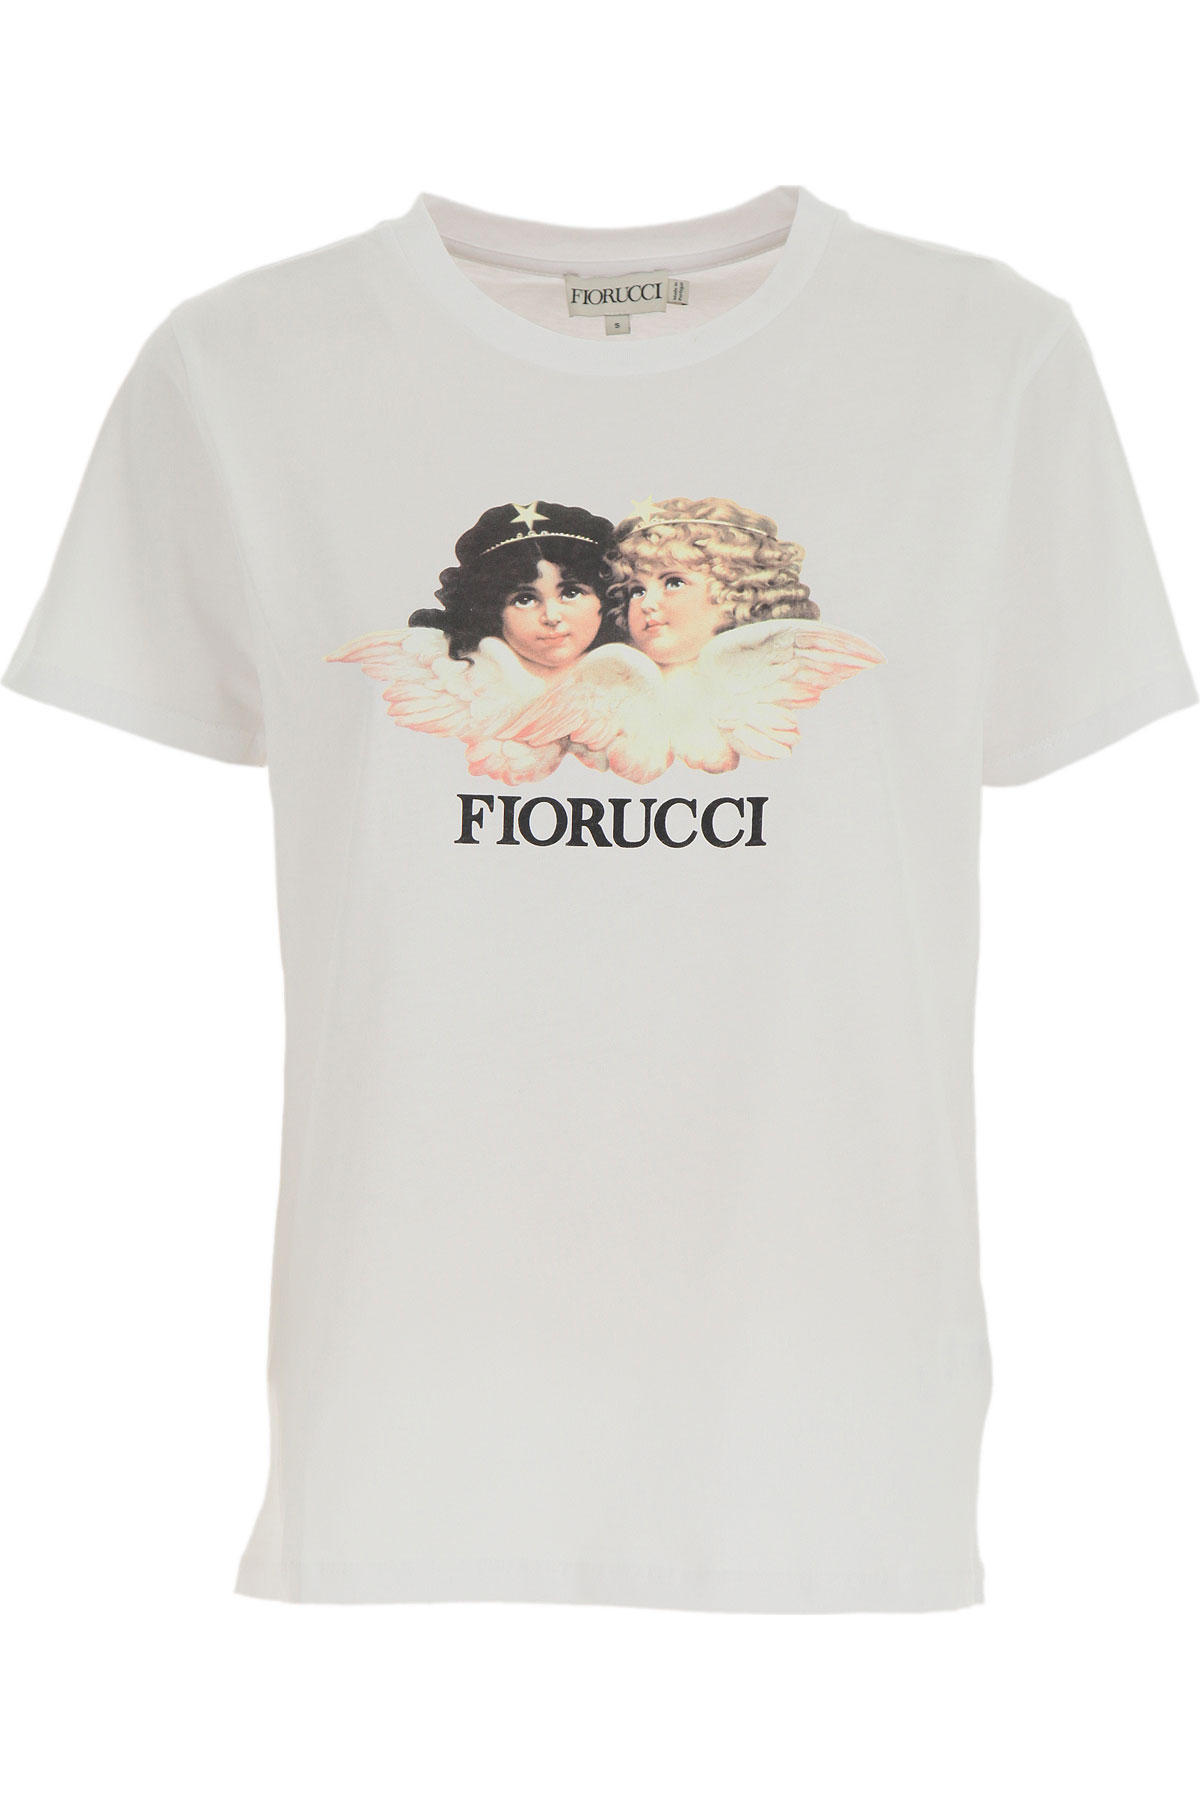 Womens Clothing Fiorucci, Style code: wwtsvancjwh-white-